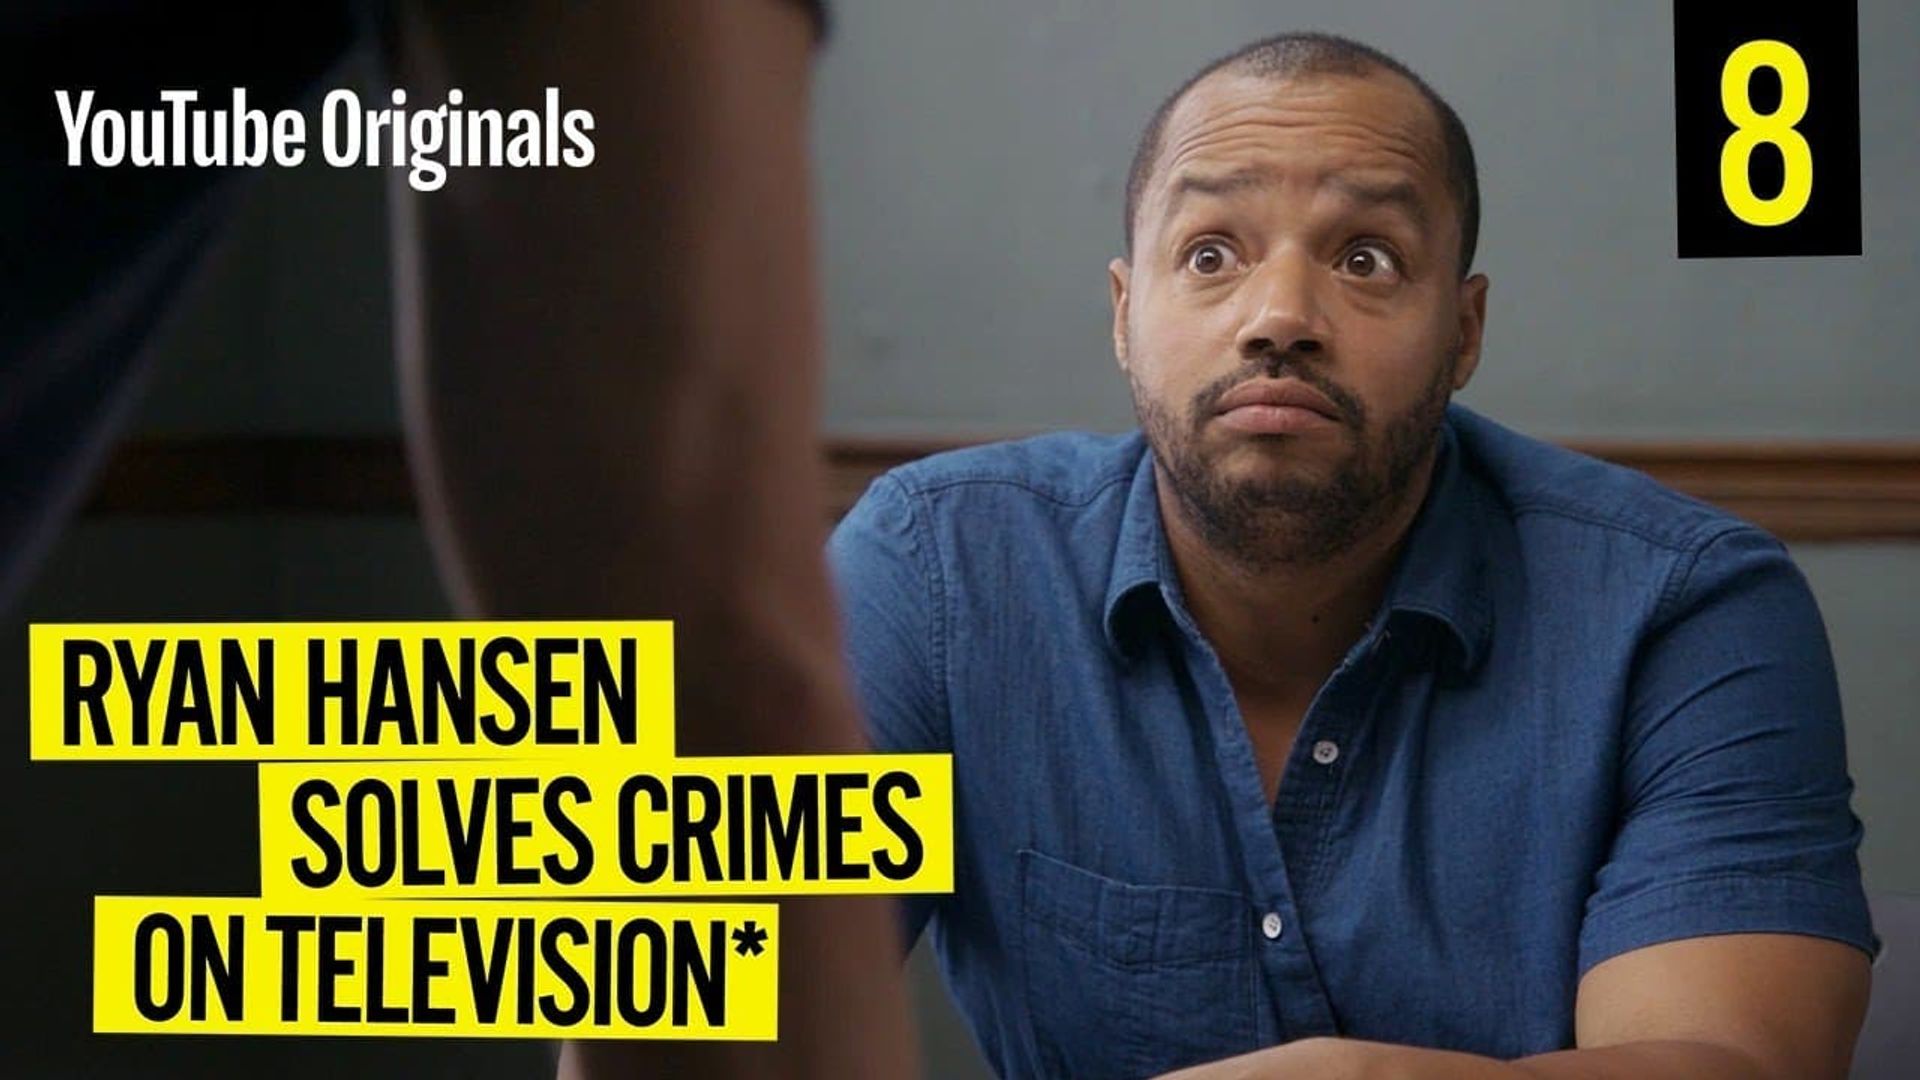 Ryan Hansen Solves Crimes on Television background